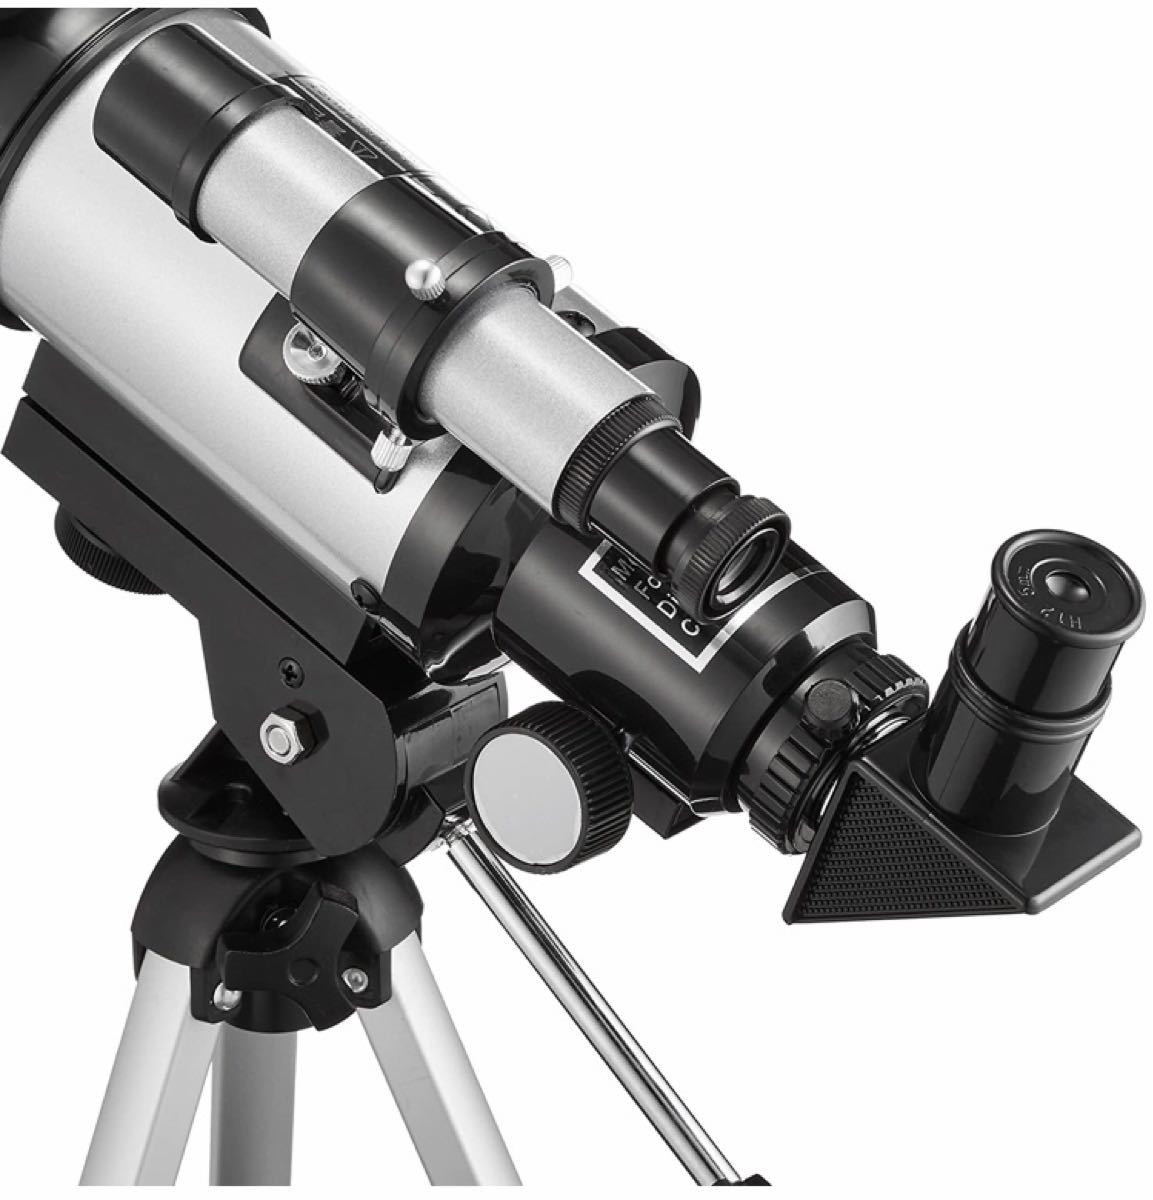 MIZAR天体望遠鏡70mm口径コンパクトタイプ 経緯台 三脚セット TS-70